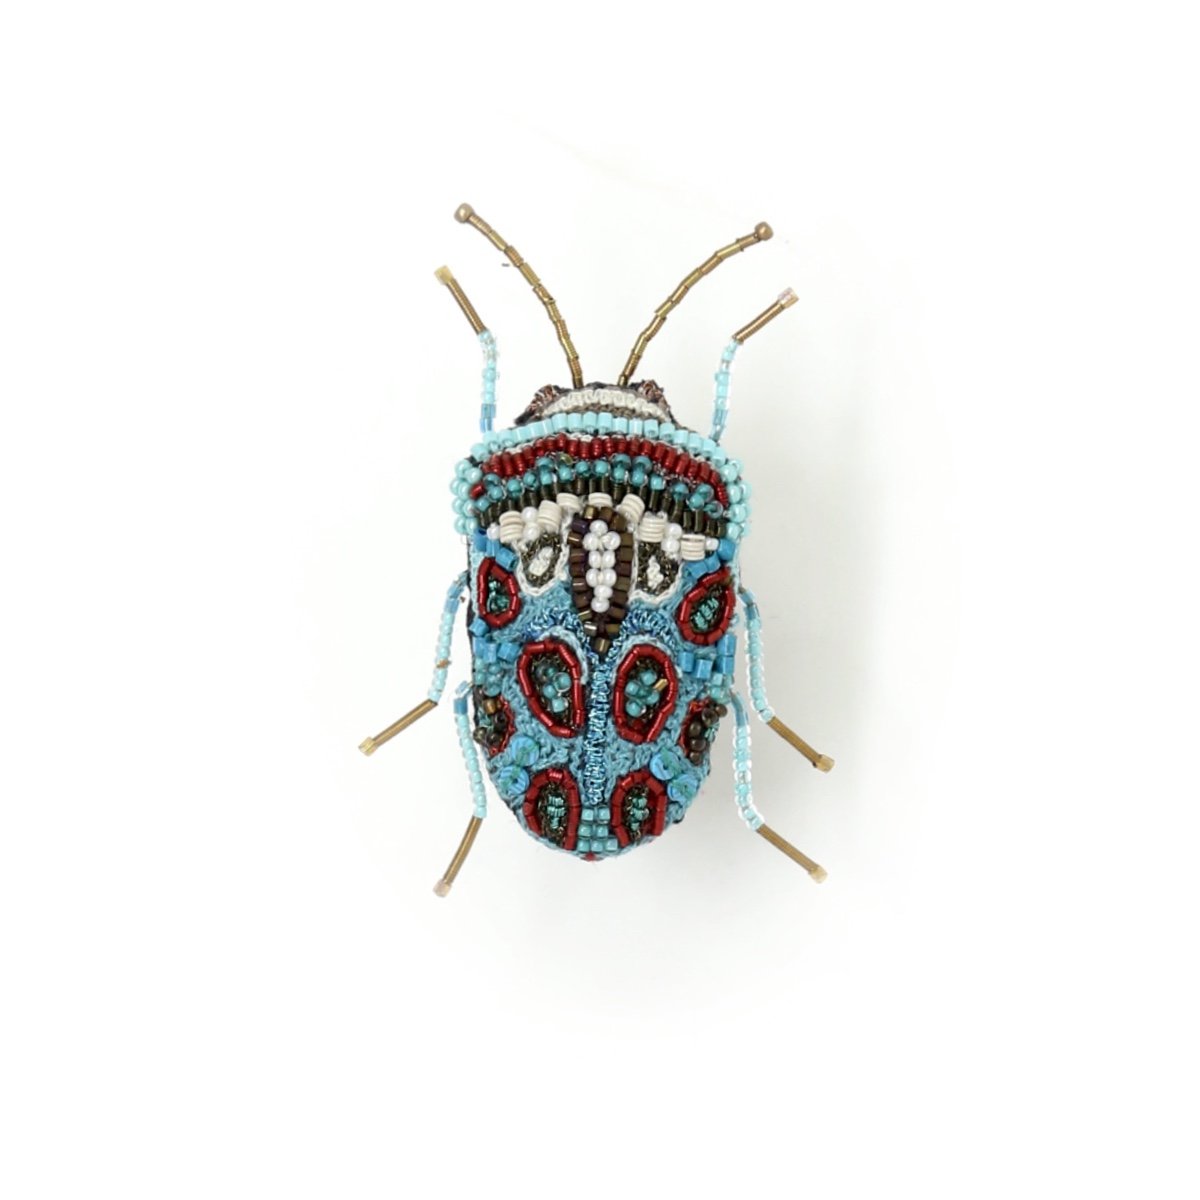 Picasso Bug Brooch